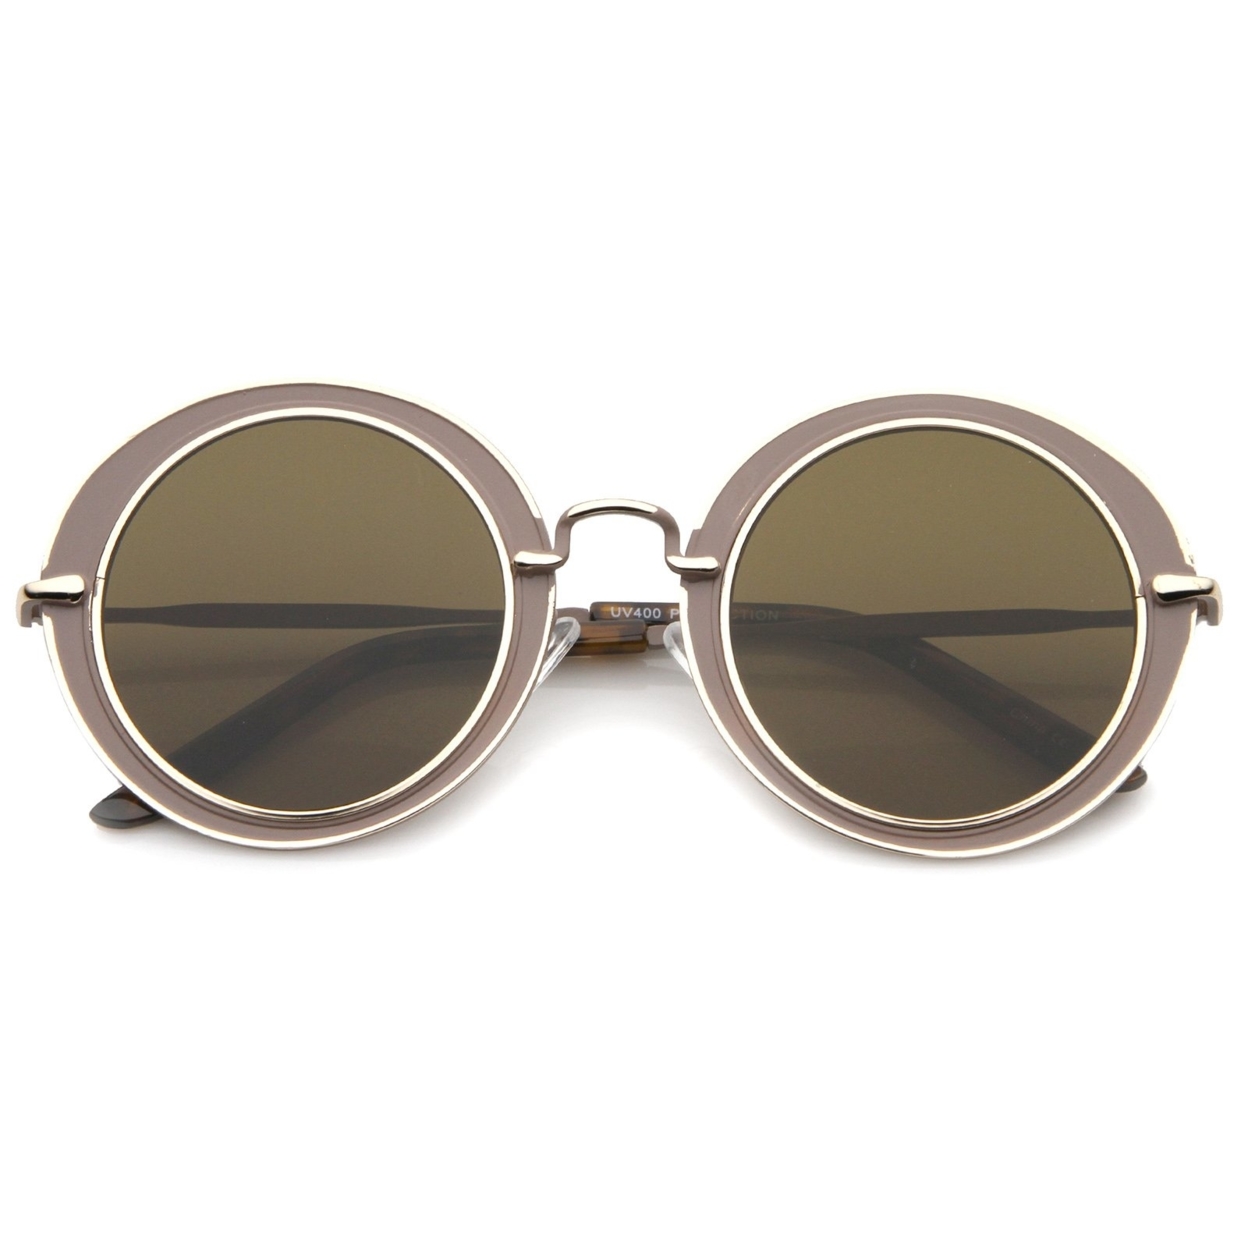 Modern Metal Frame Matte Border Colored Mirror Flat Lens Round Sunglasses 48mm - Black-Gold / Green Mirror